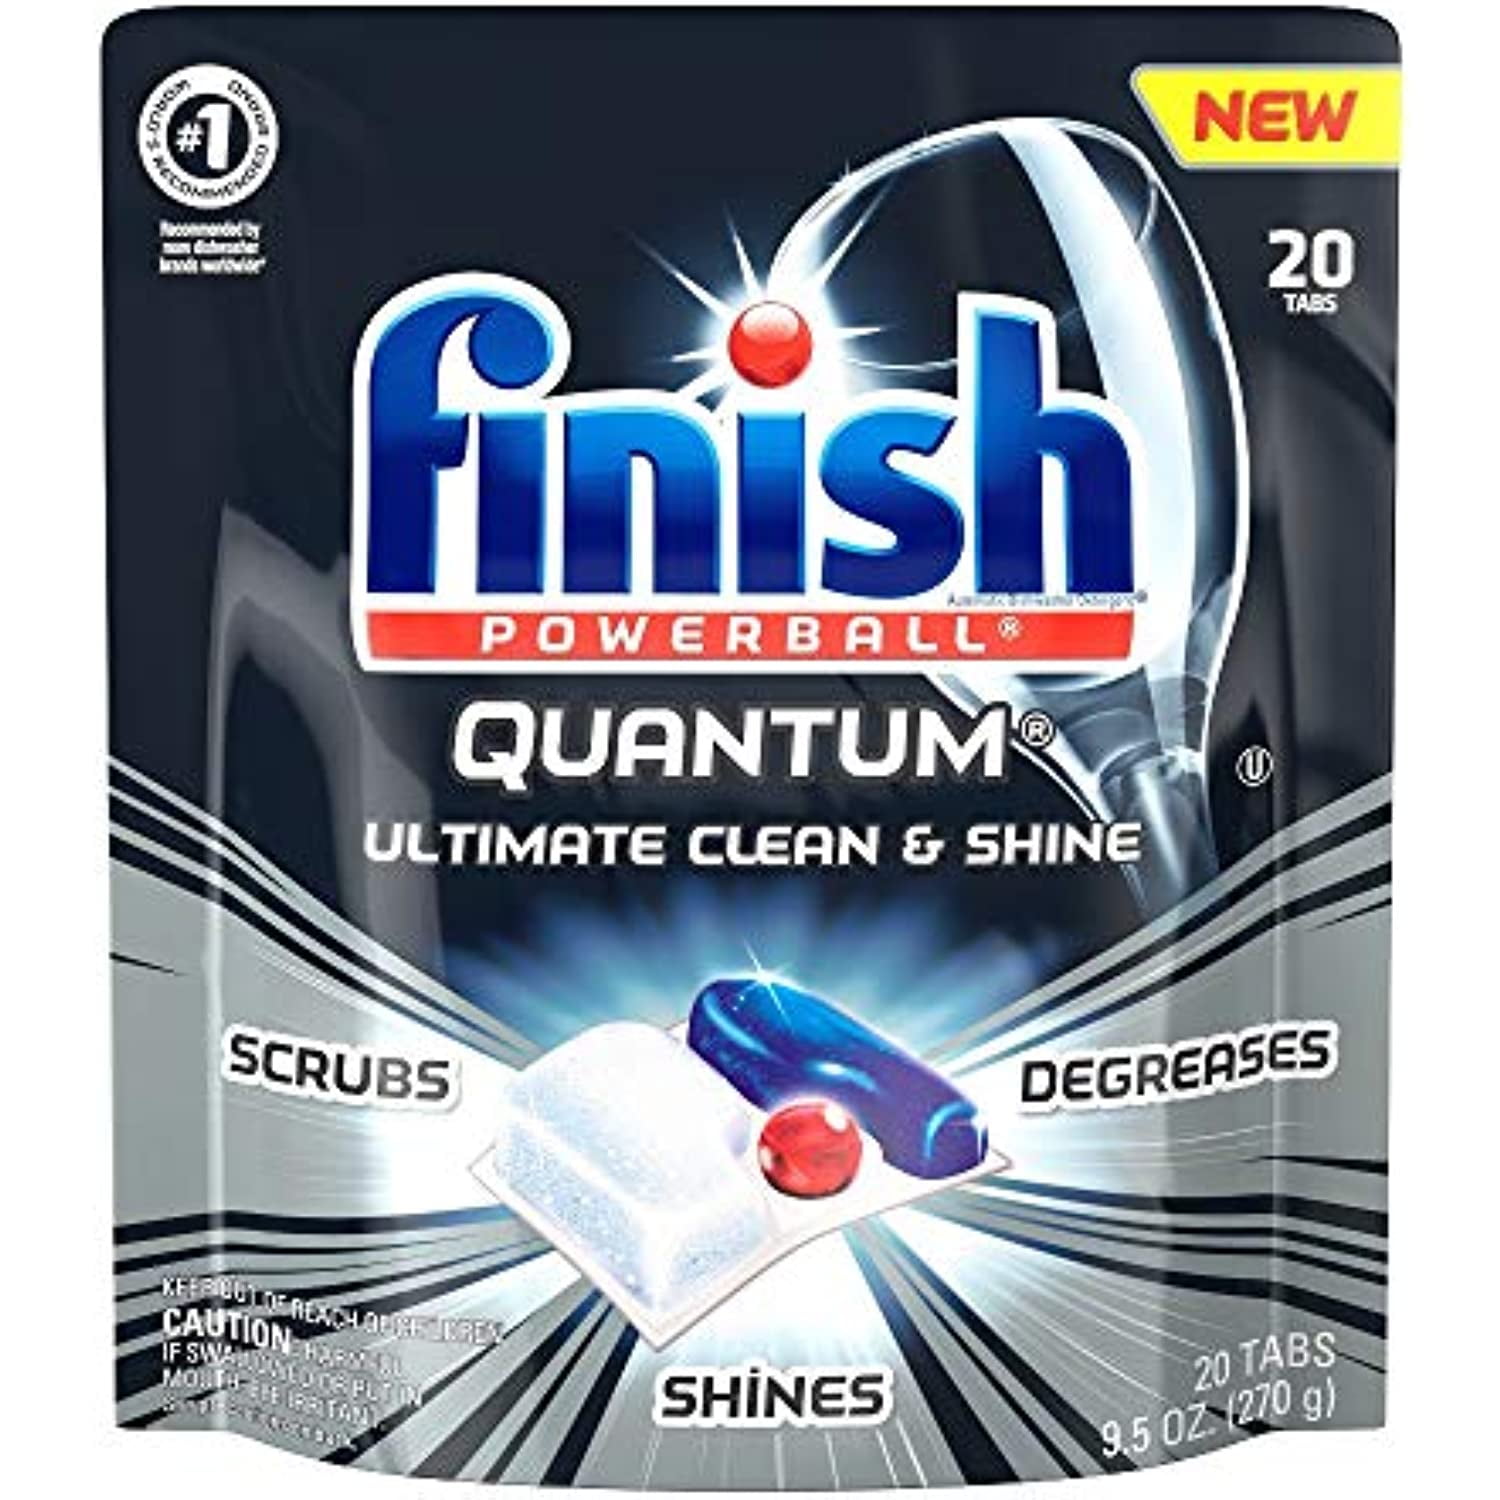 Finish Quantum Ultimate Clean & Shine, Dishwasher Detergent Tablets